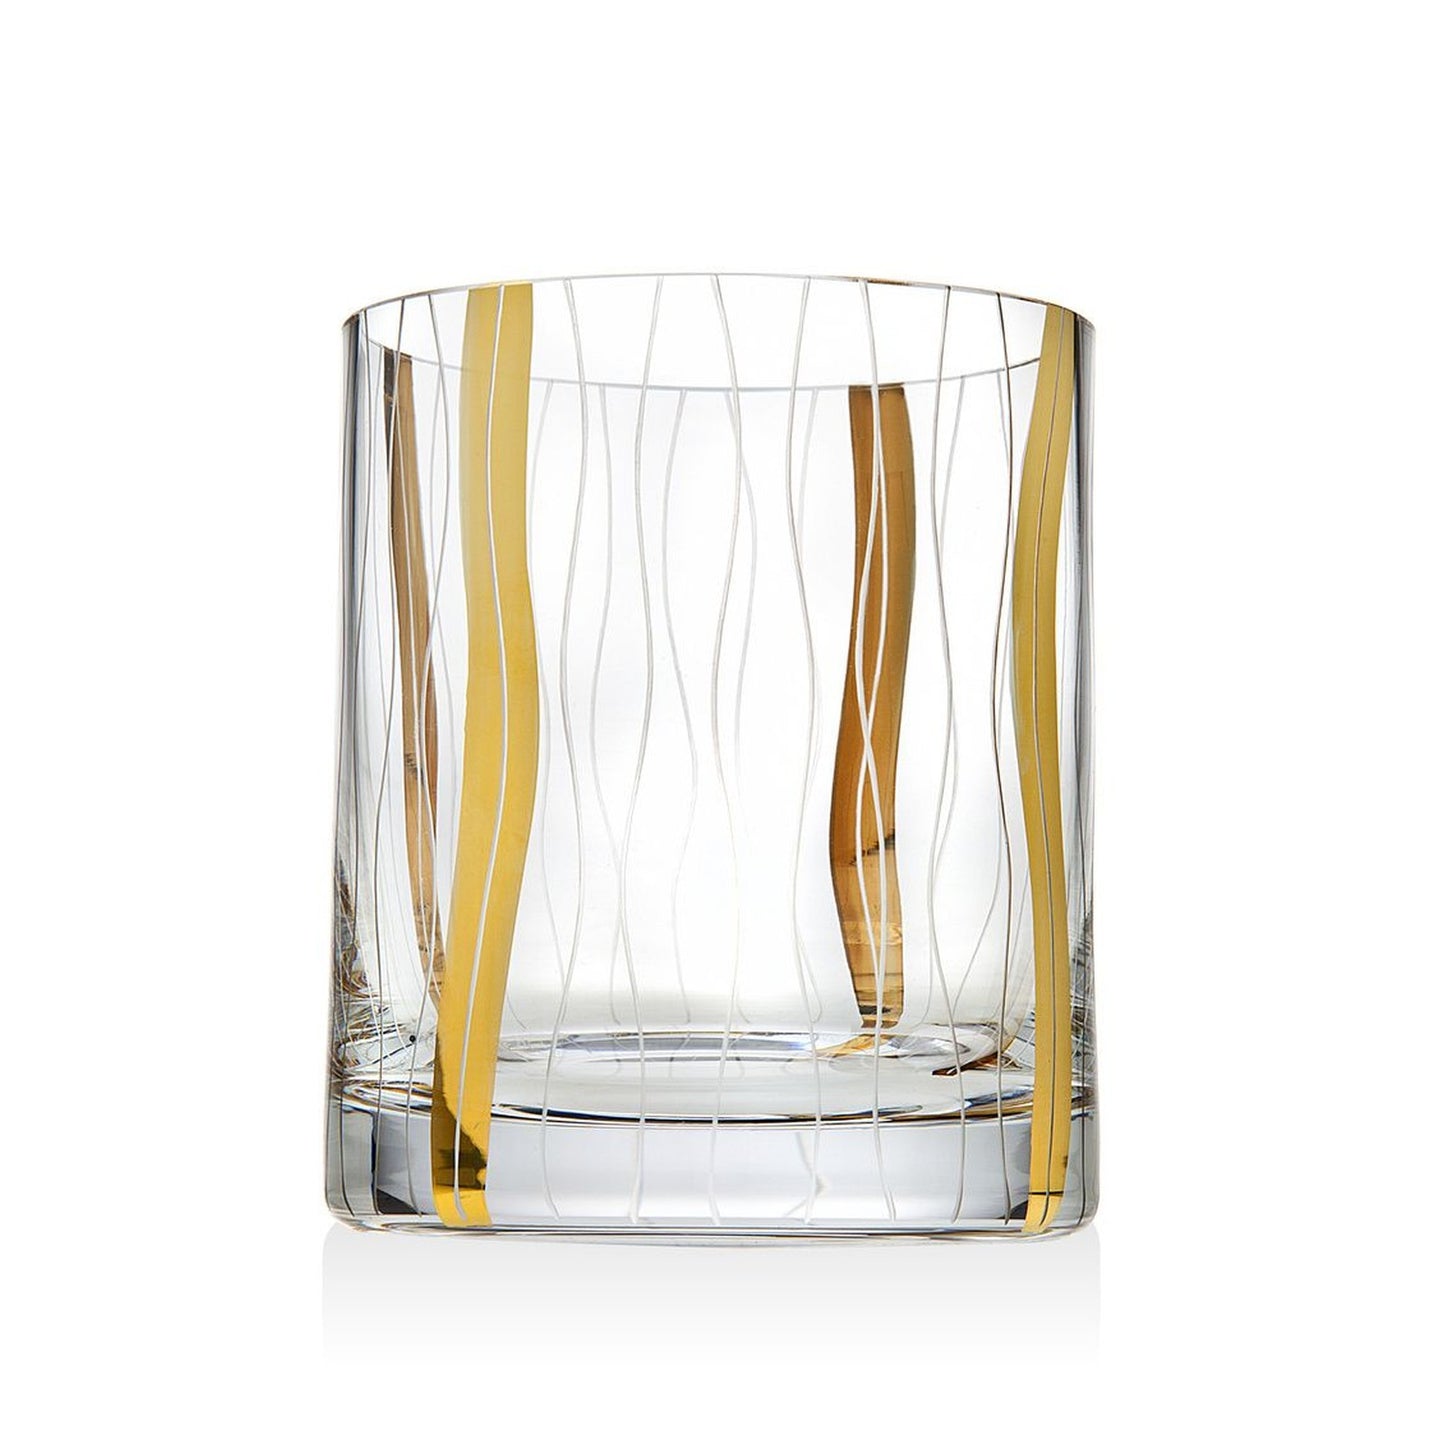 Godinger Seabreeze Gold Set Of 4 Double Old Fashioned Glasses